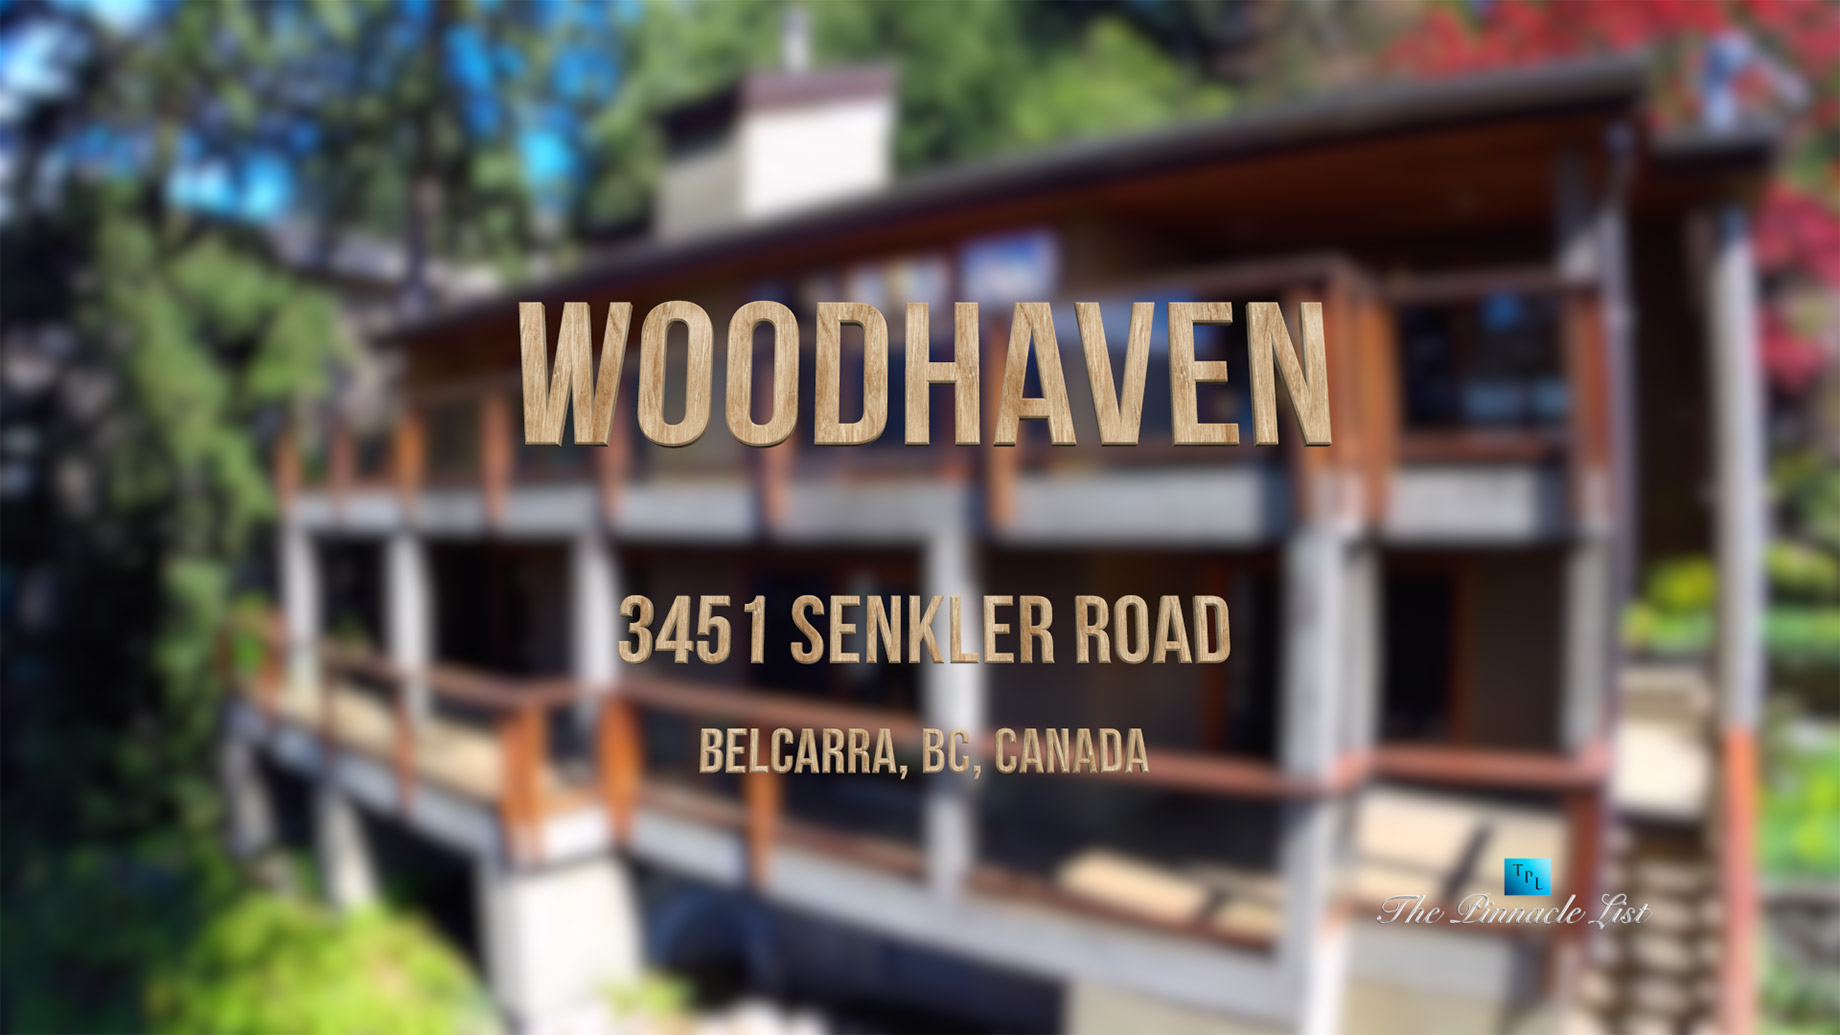 Woodhaven - 3451 Senkler Rd, Belcarra, BC, Canada - Luxury Real Estate